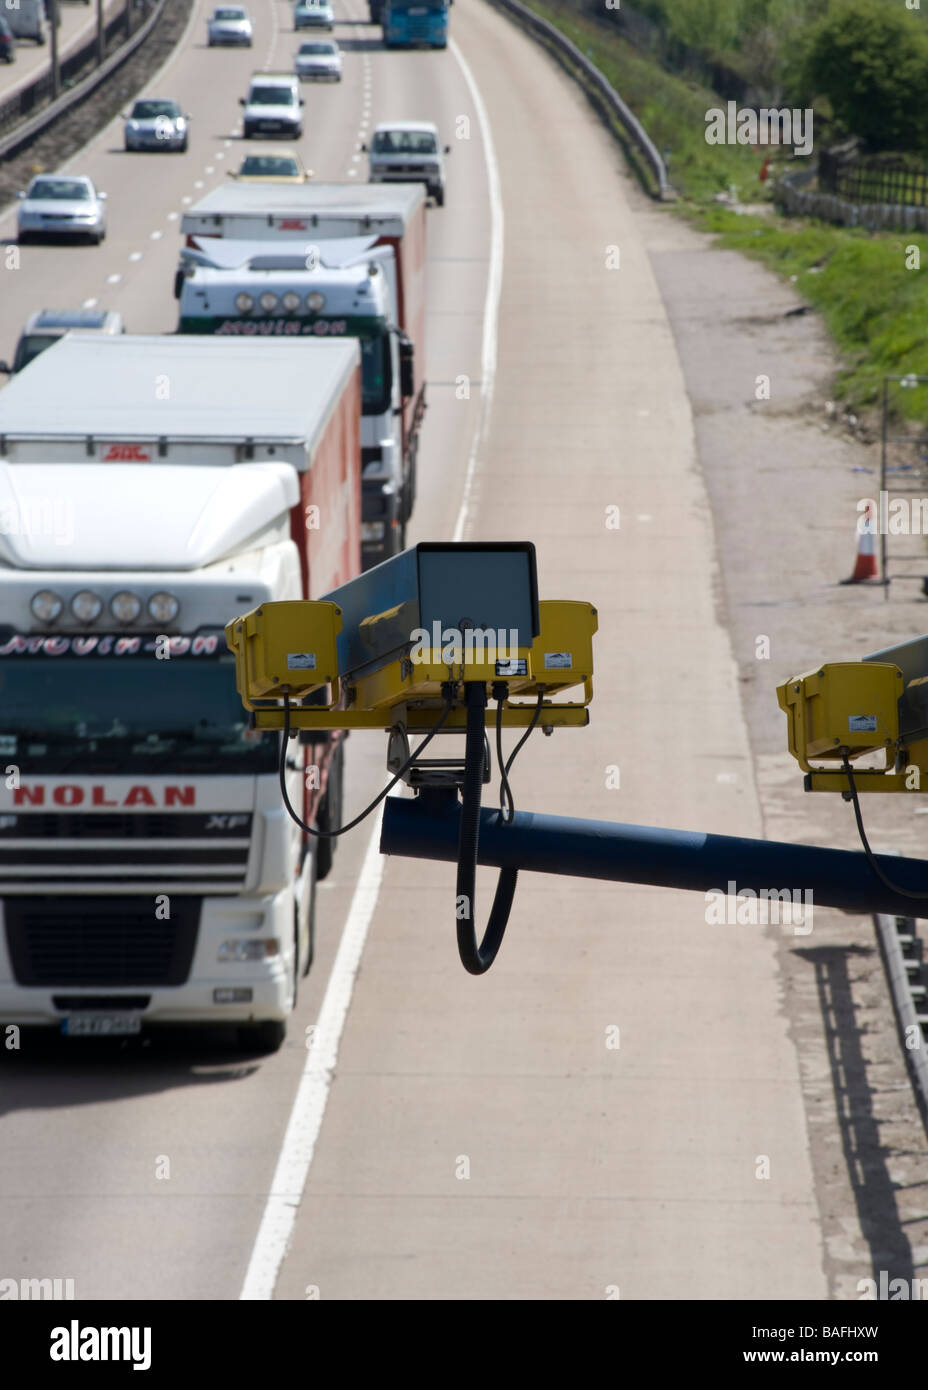 Traffic under surveillance as it passes through Essex on the M25. Stock Photo